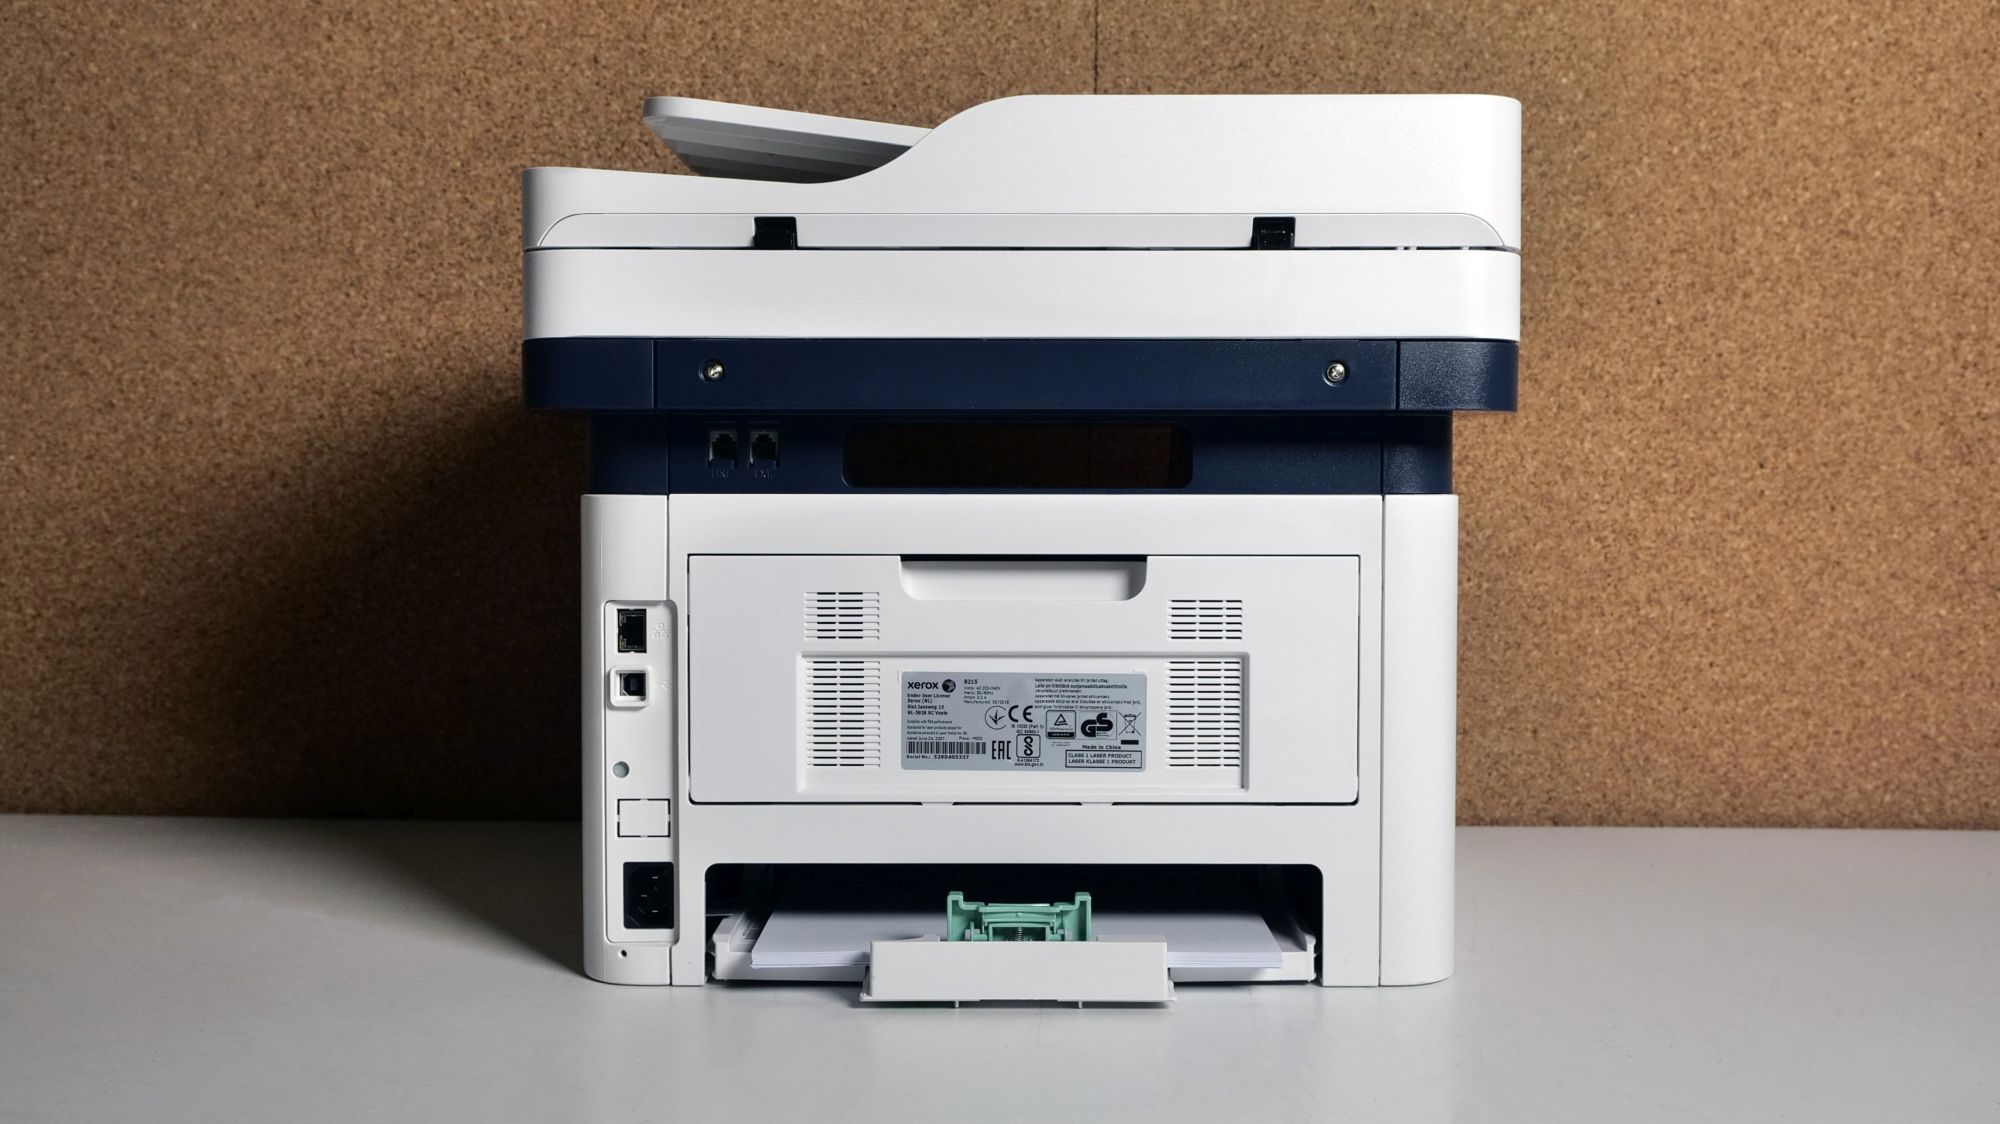 Xerox b405dn